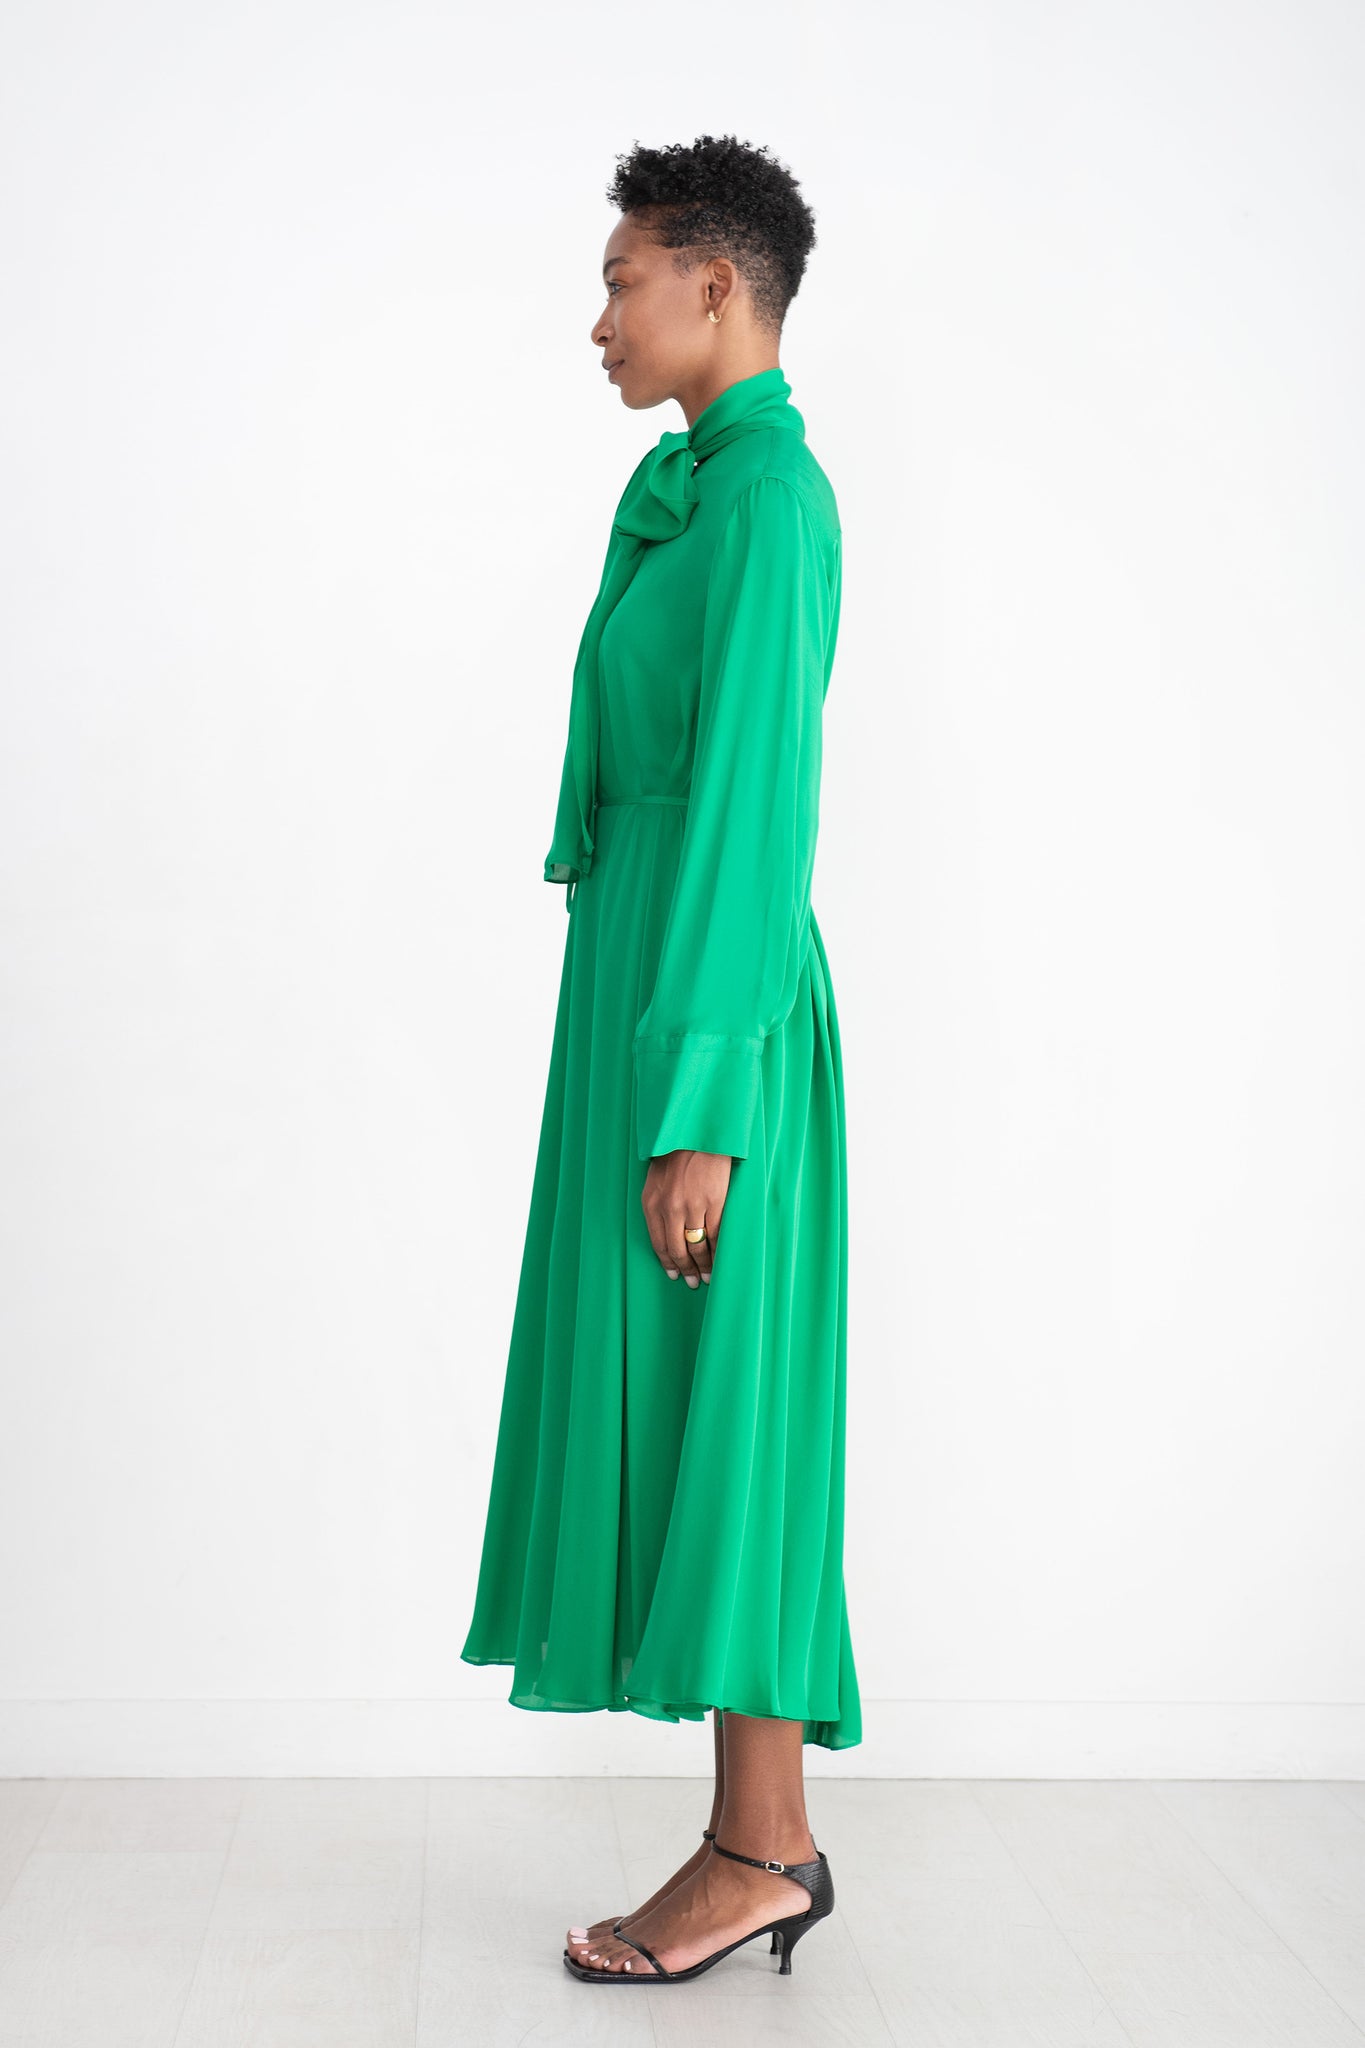 HEIRLOME - Joanna Dress, Emerald